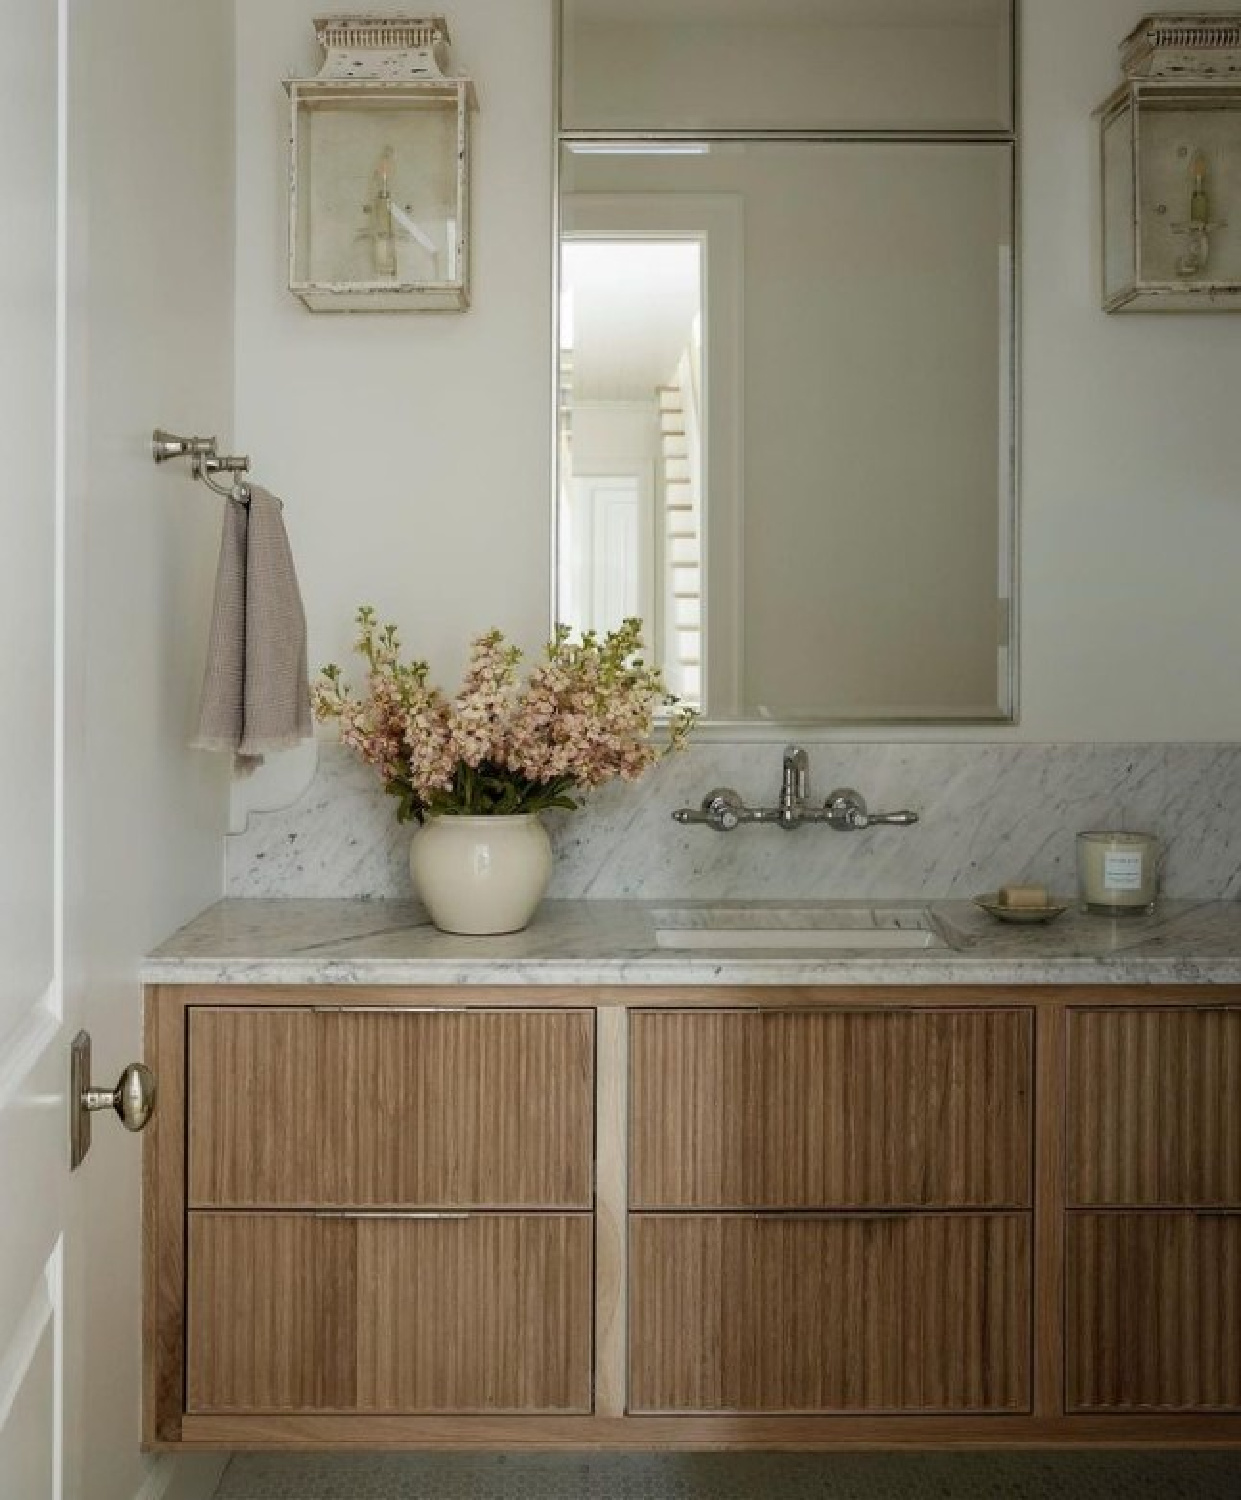 Classic bathroom design with wall mount faucet - Alex Adamson Design.